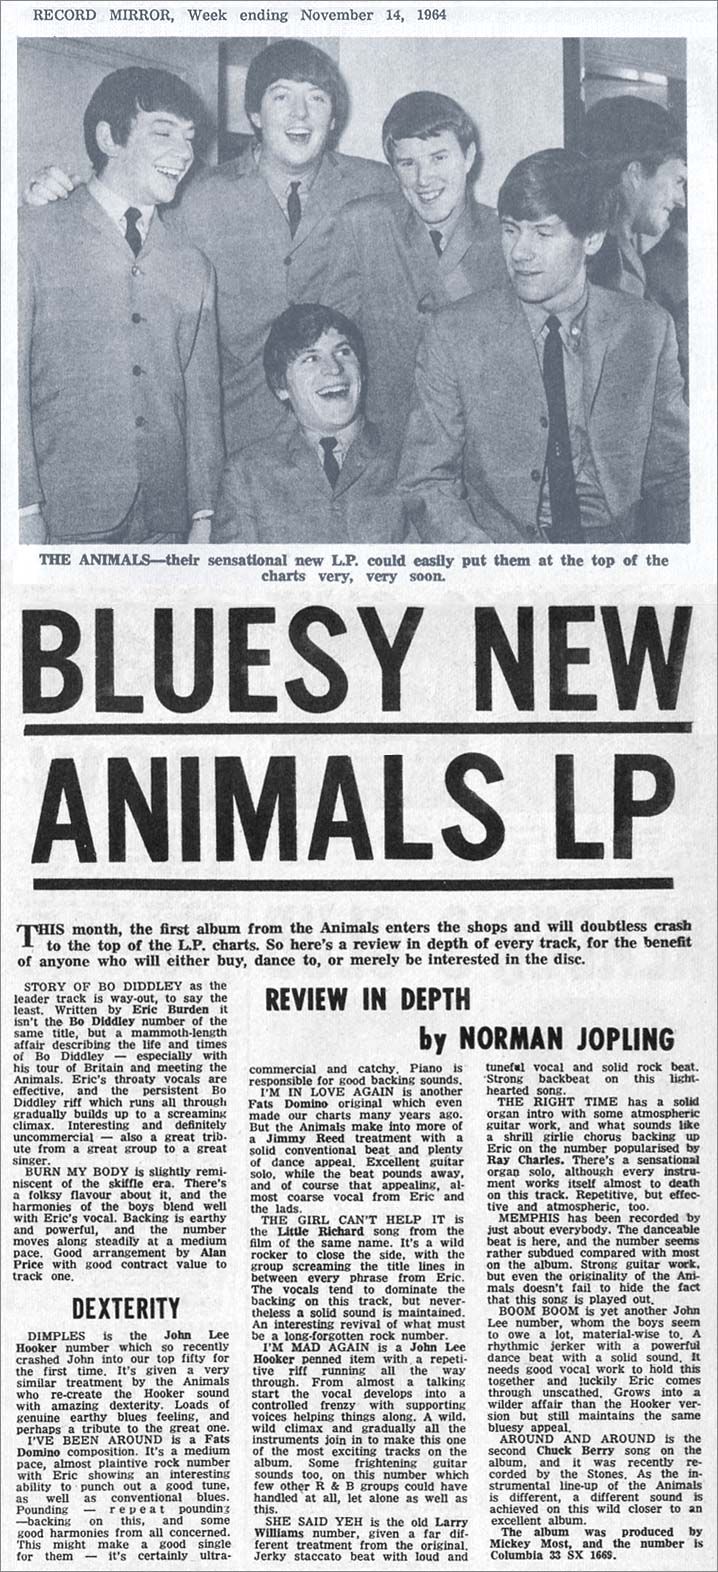 Record Mirror Album Review, November 14, 1964